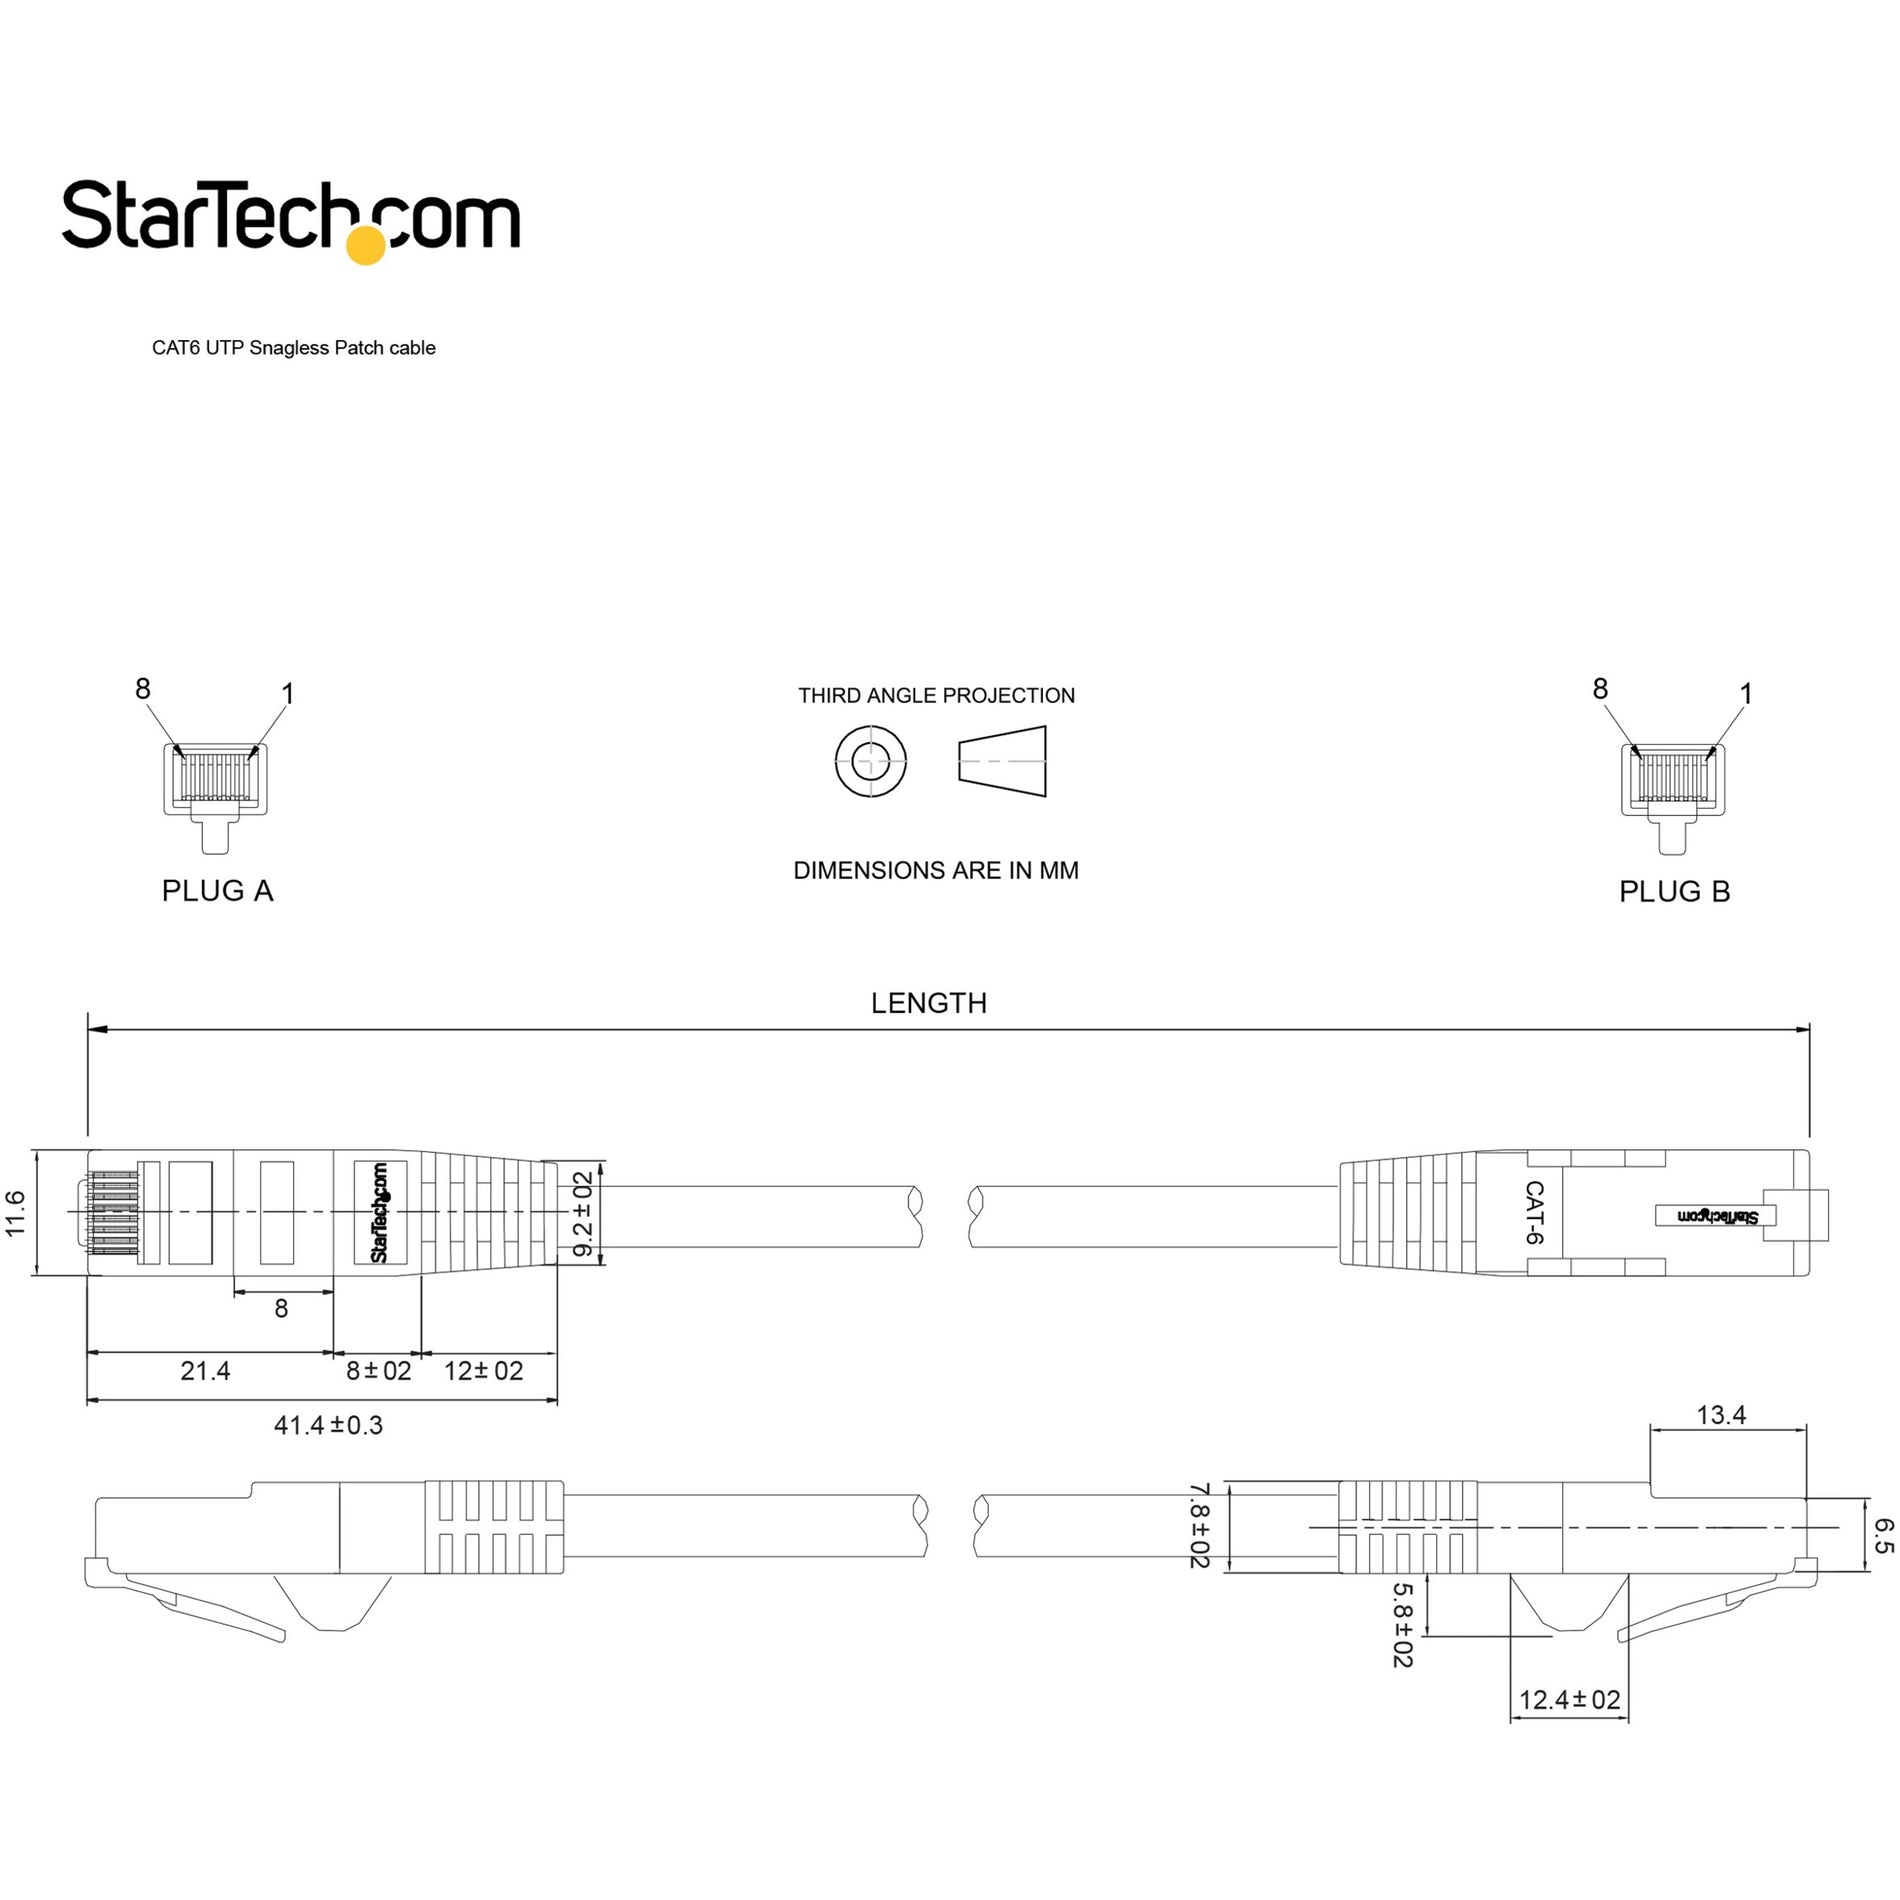 StarTech.com N6PATCH25BL 25 ft 蓝色无卡扣Cat6补丁电缆，ETL验证